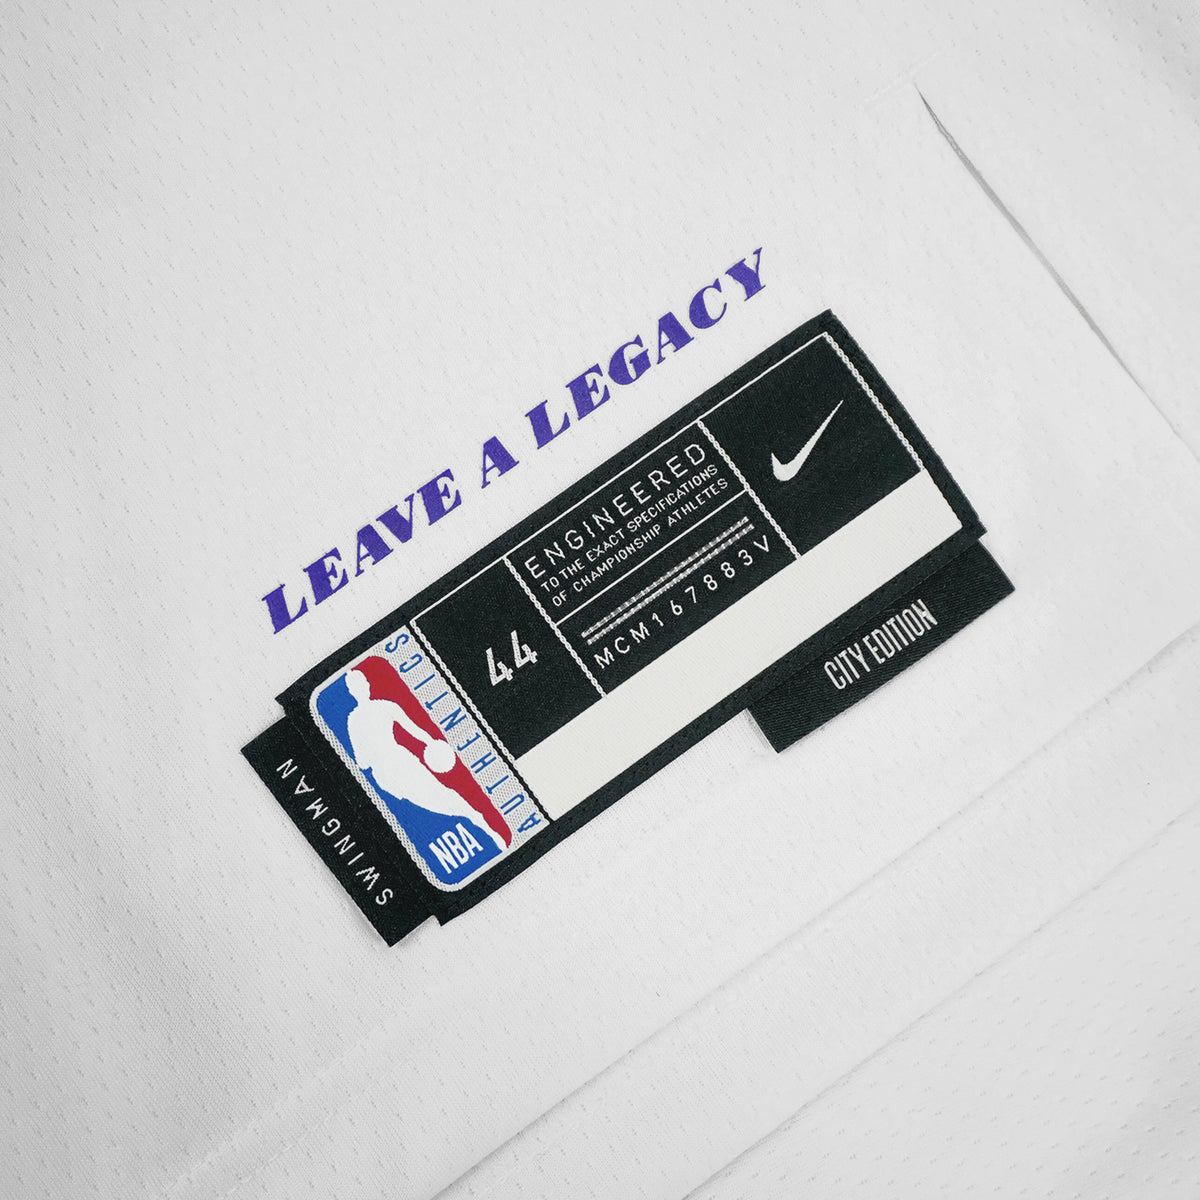 Nike Men's LeBron James Los Angeles Lakers City Edition Swingman